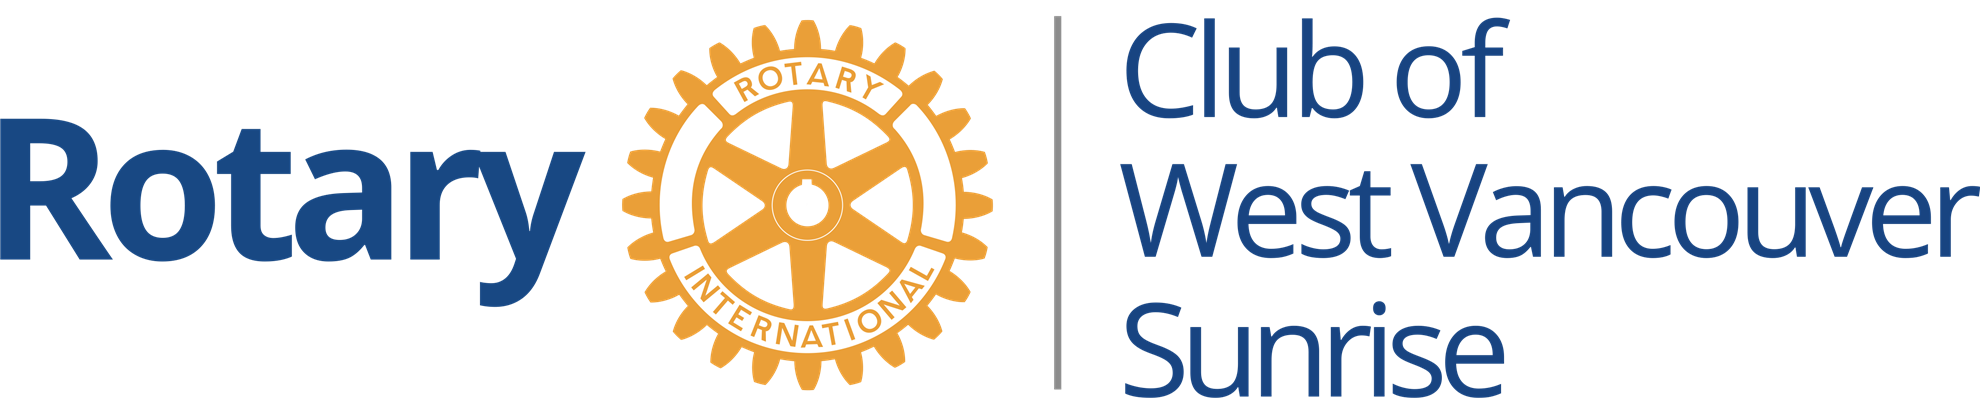 West Vancouver Sunri logo